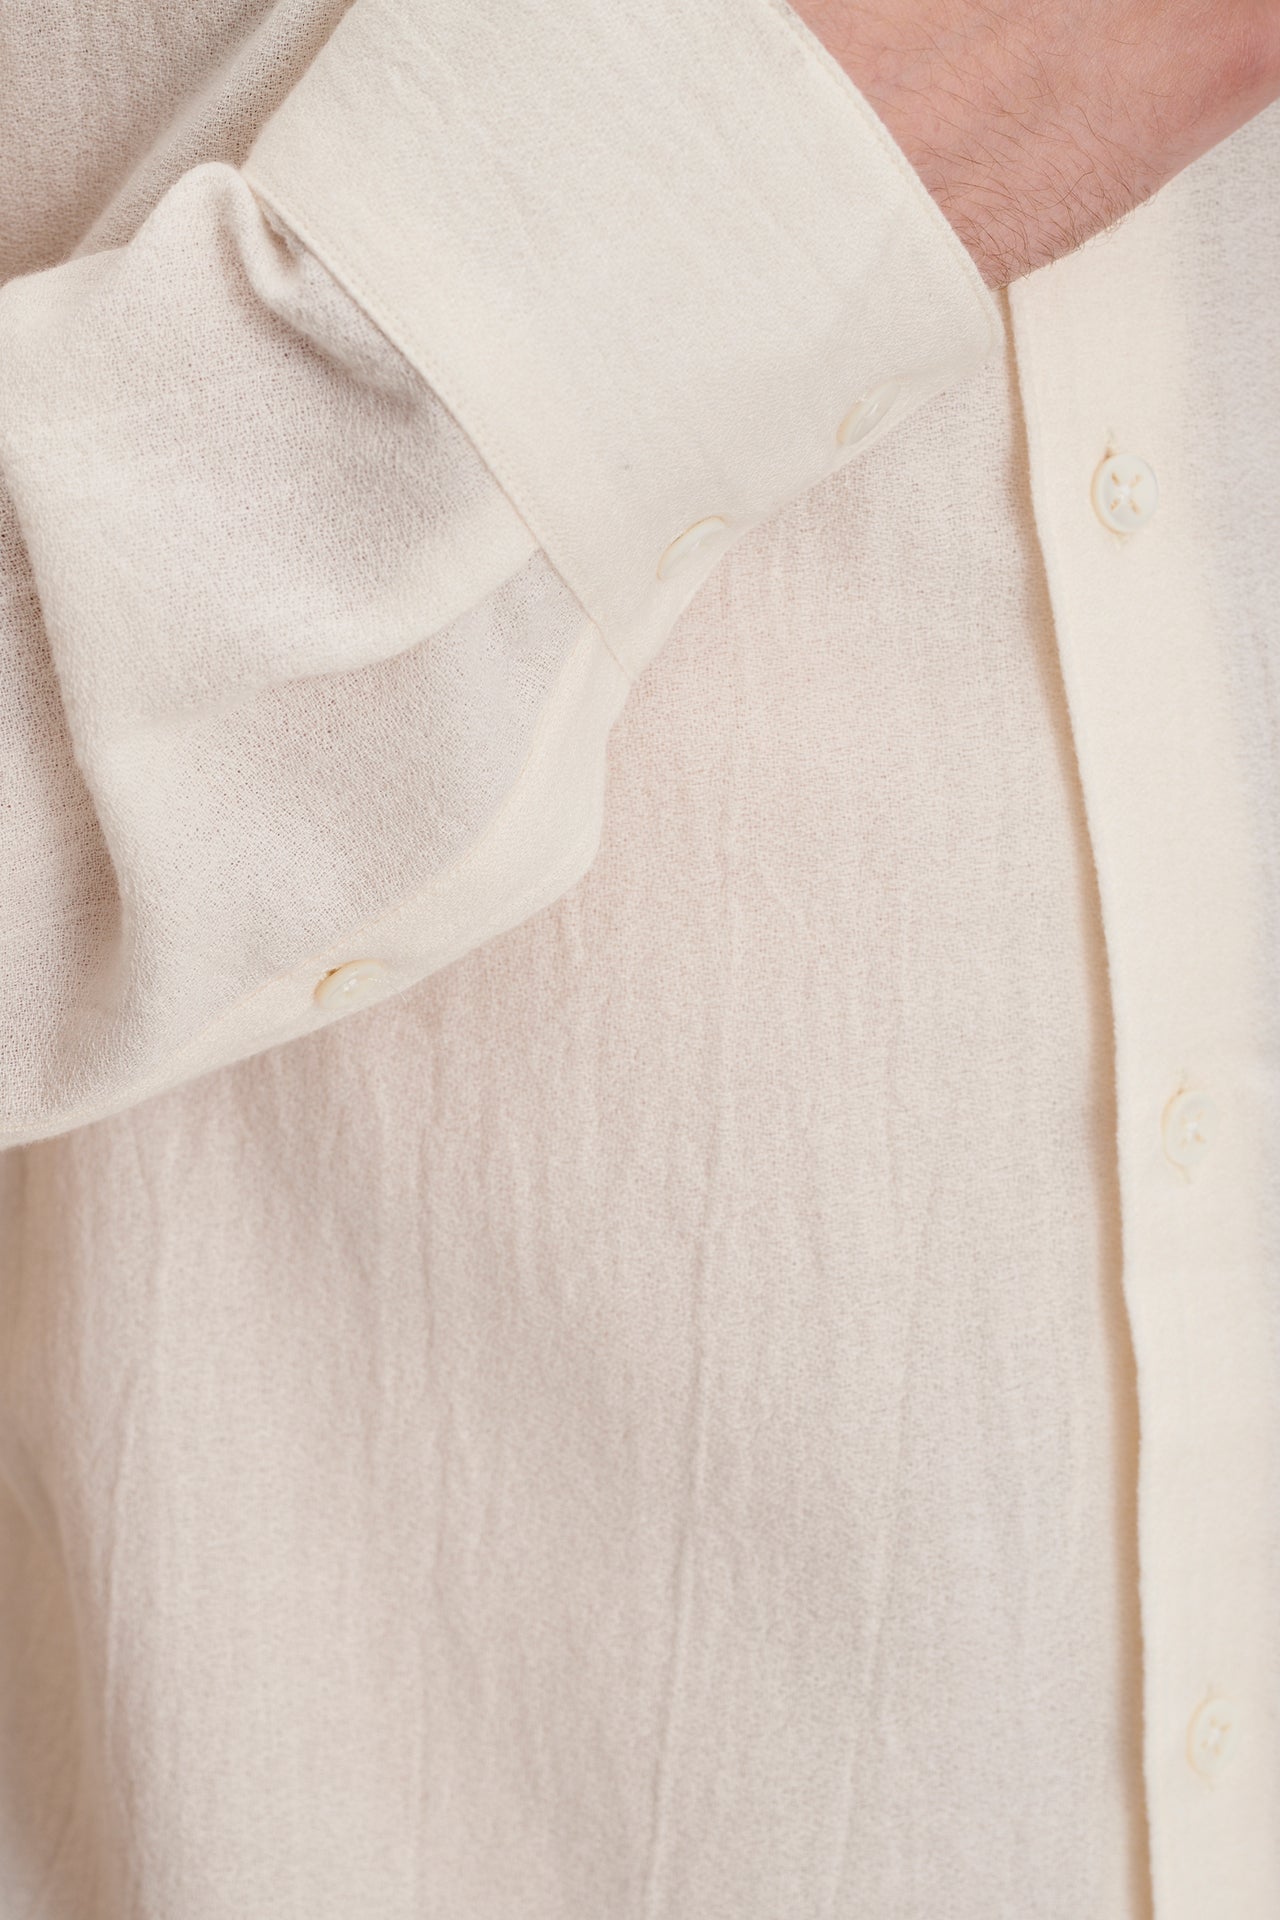 Feel Good Shirt in a Very Soft Cream White Japanese Organic Cotton